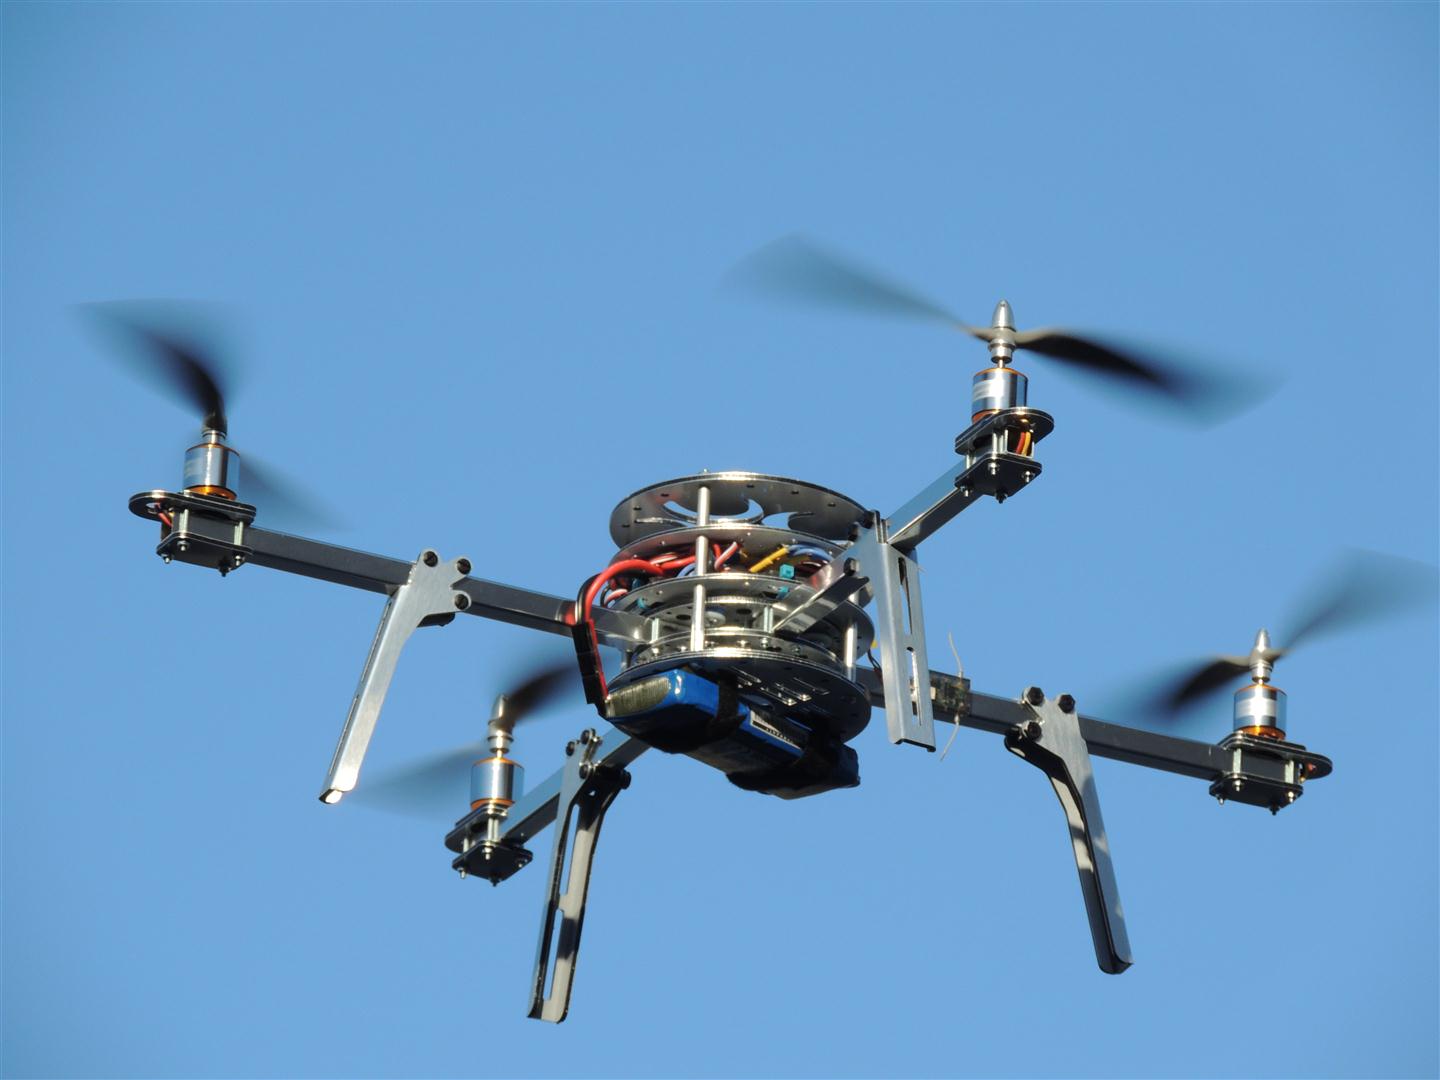 https://oscarliang.com/wp-content/uploads/2013/06/Quadcopter-flying.jpg